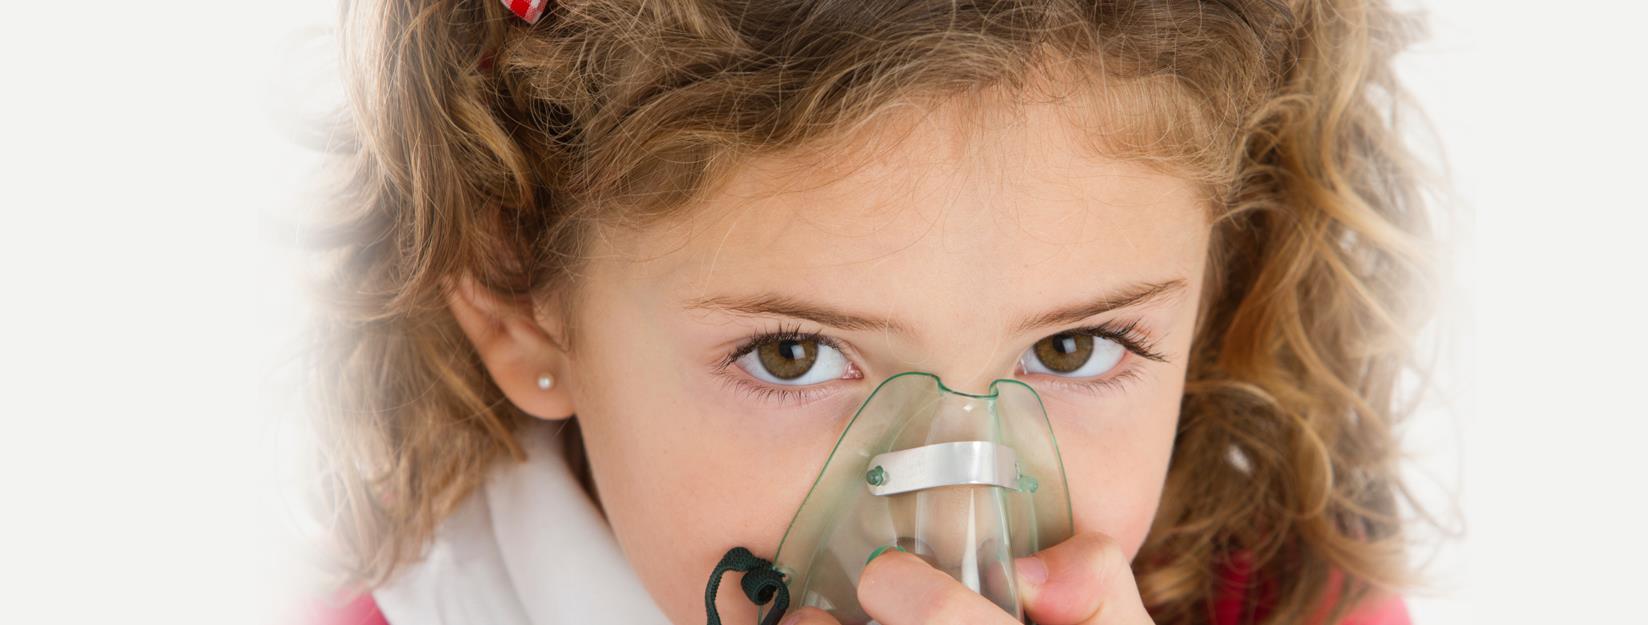 Consejos para prevenir las enfermedades respiratorias